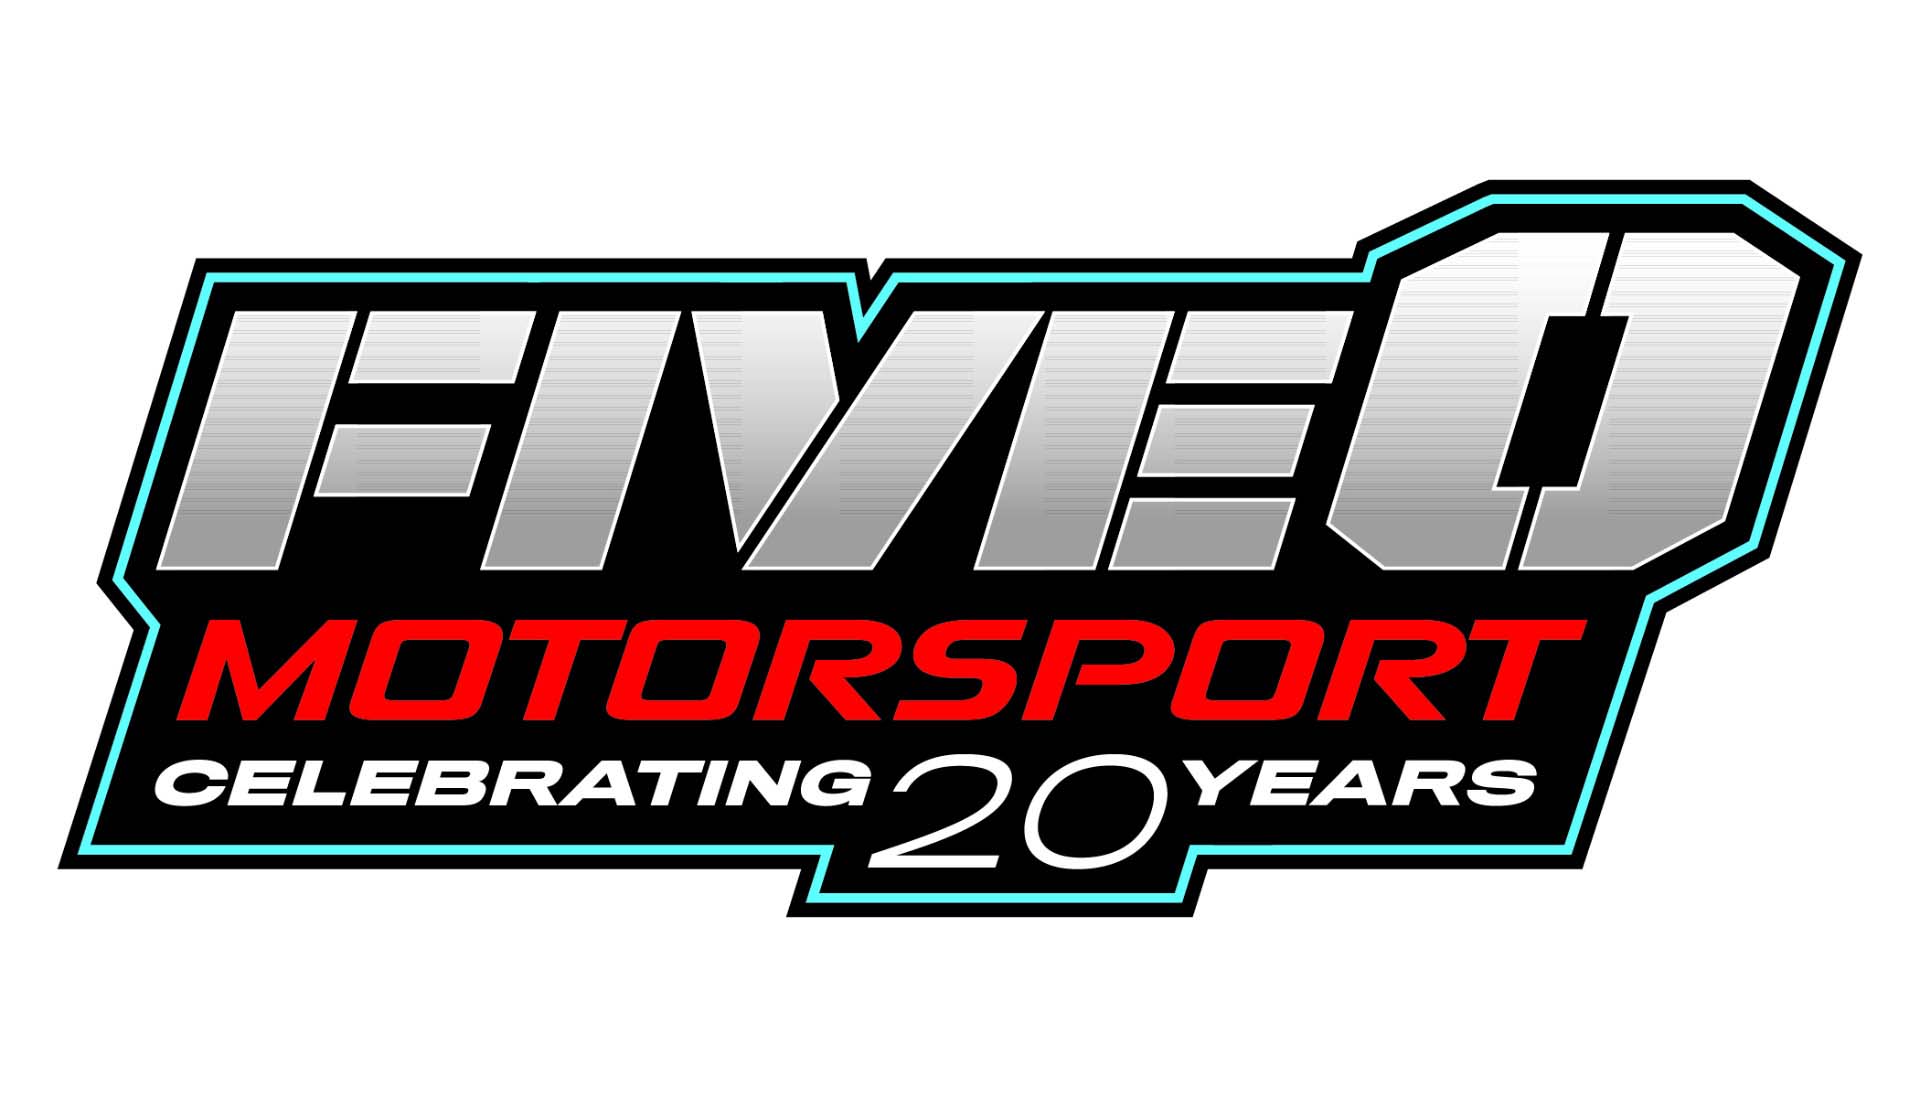 Fiveo 20 year logo